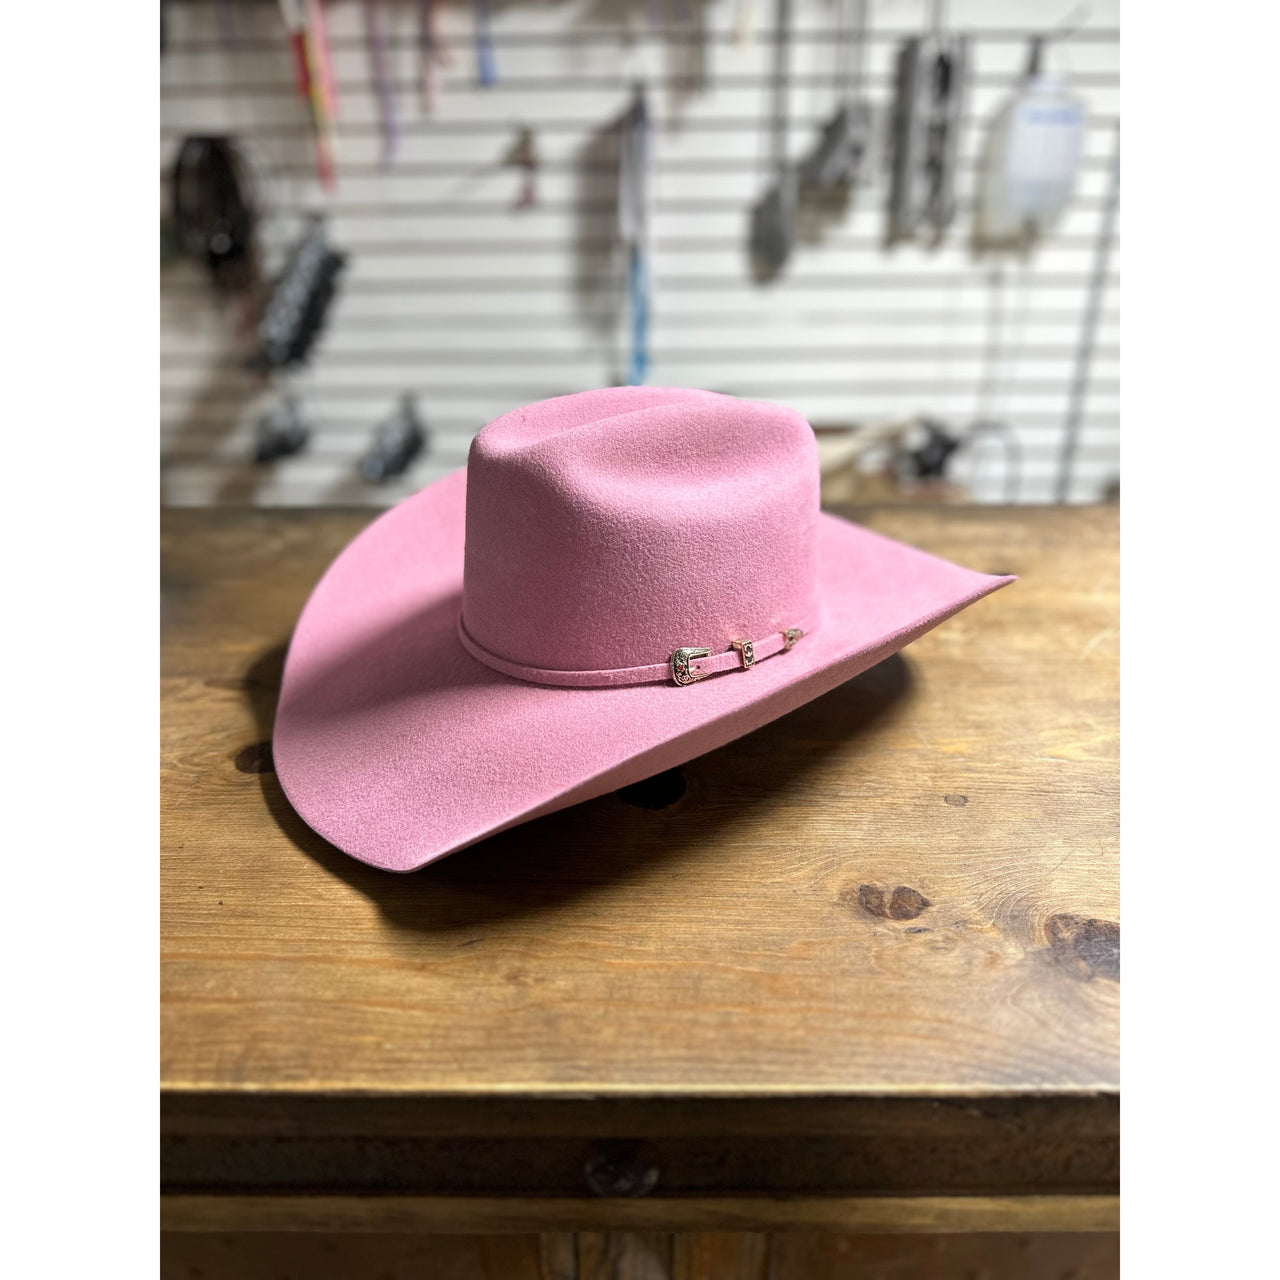 Prohat  Wool Felt Precreased Western Hat - Calgary Pink